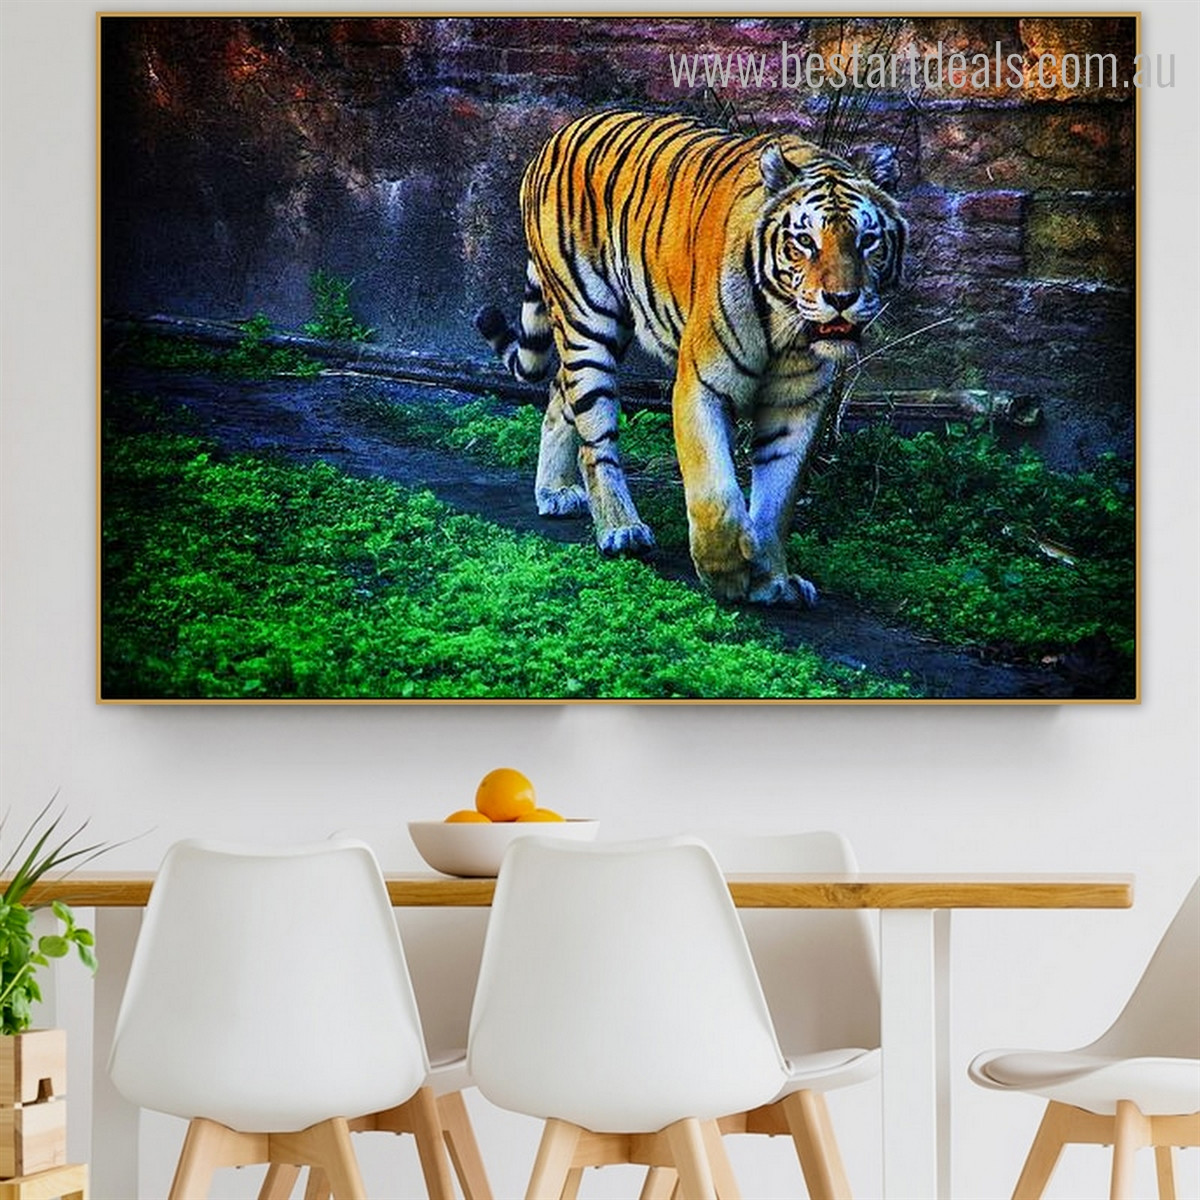 Wild Tiger Modern Animal Botanical Framed Vignette Photo Canvas Print for Dining Room Wall Decor